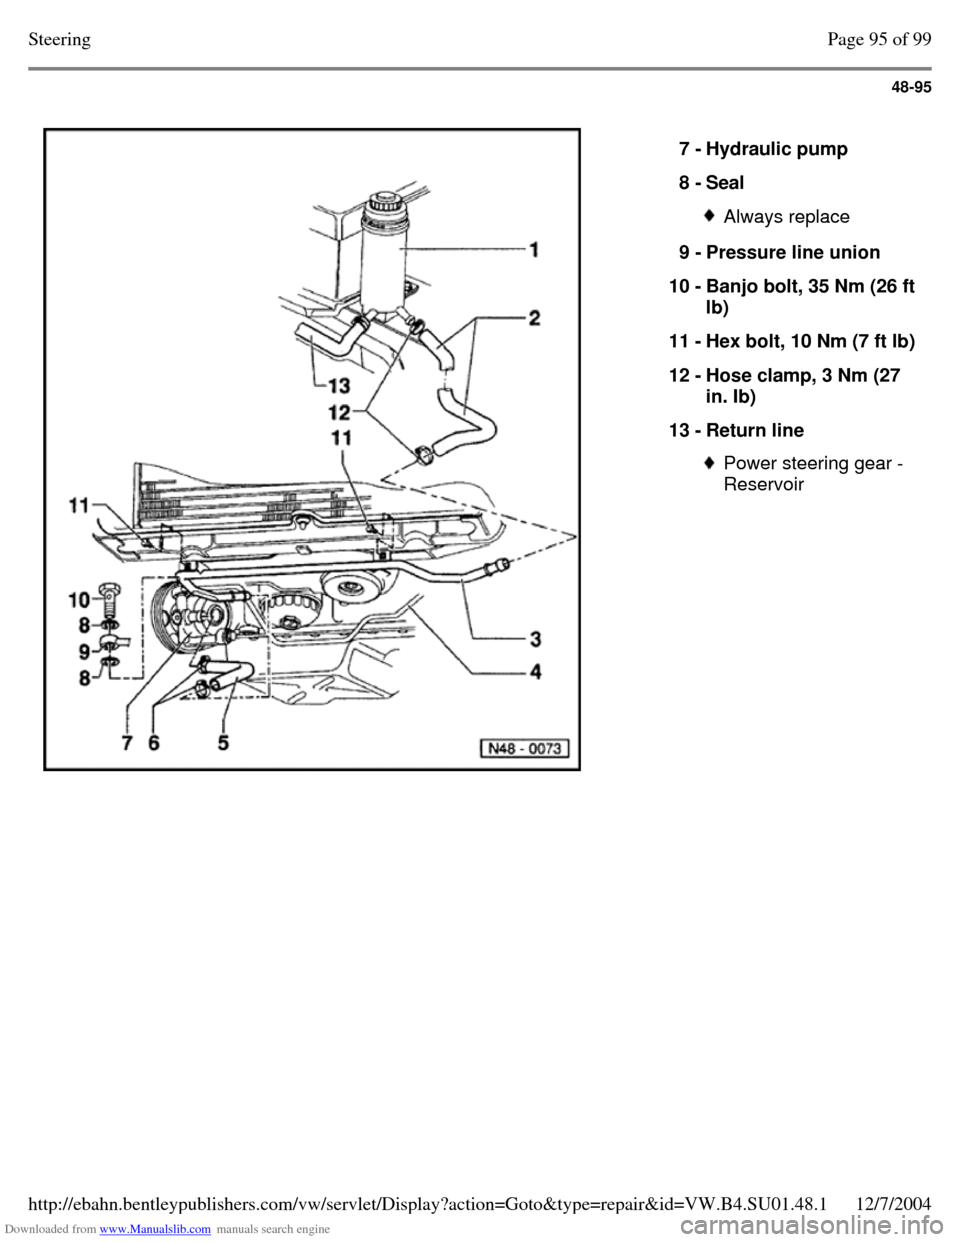 VOLKSWAGEN PASSAT 1996 B3, B4 / 3.G Service Workshop Manual Downloaded from www.Manualslib.com manuals search engine 48-95
   
7 - Hydraulic pump 
8 - Seal  Always replace 9 - Pressure line union 
10 - Banjo bolt, 35 Nm (26 ft lb) 
11 - Hex bolt, 10 Nm (7 ft l